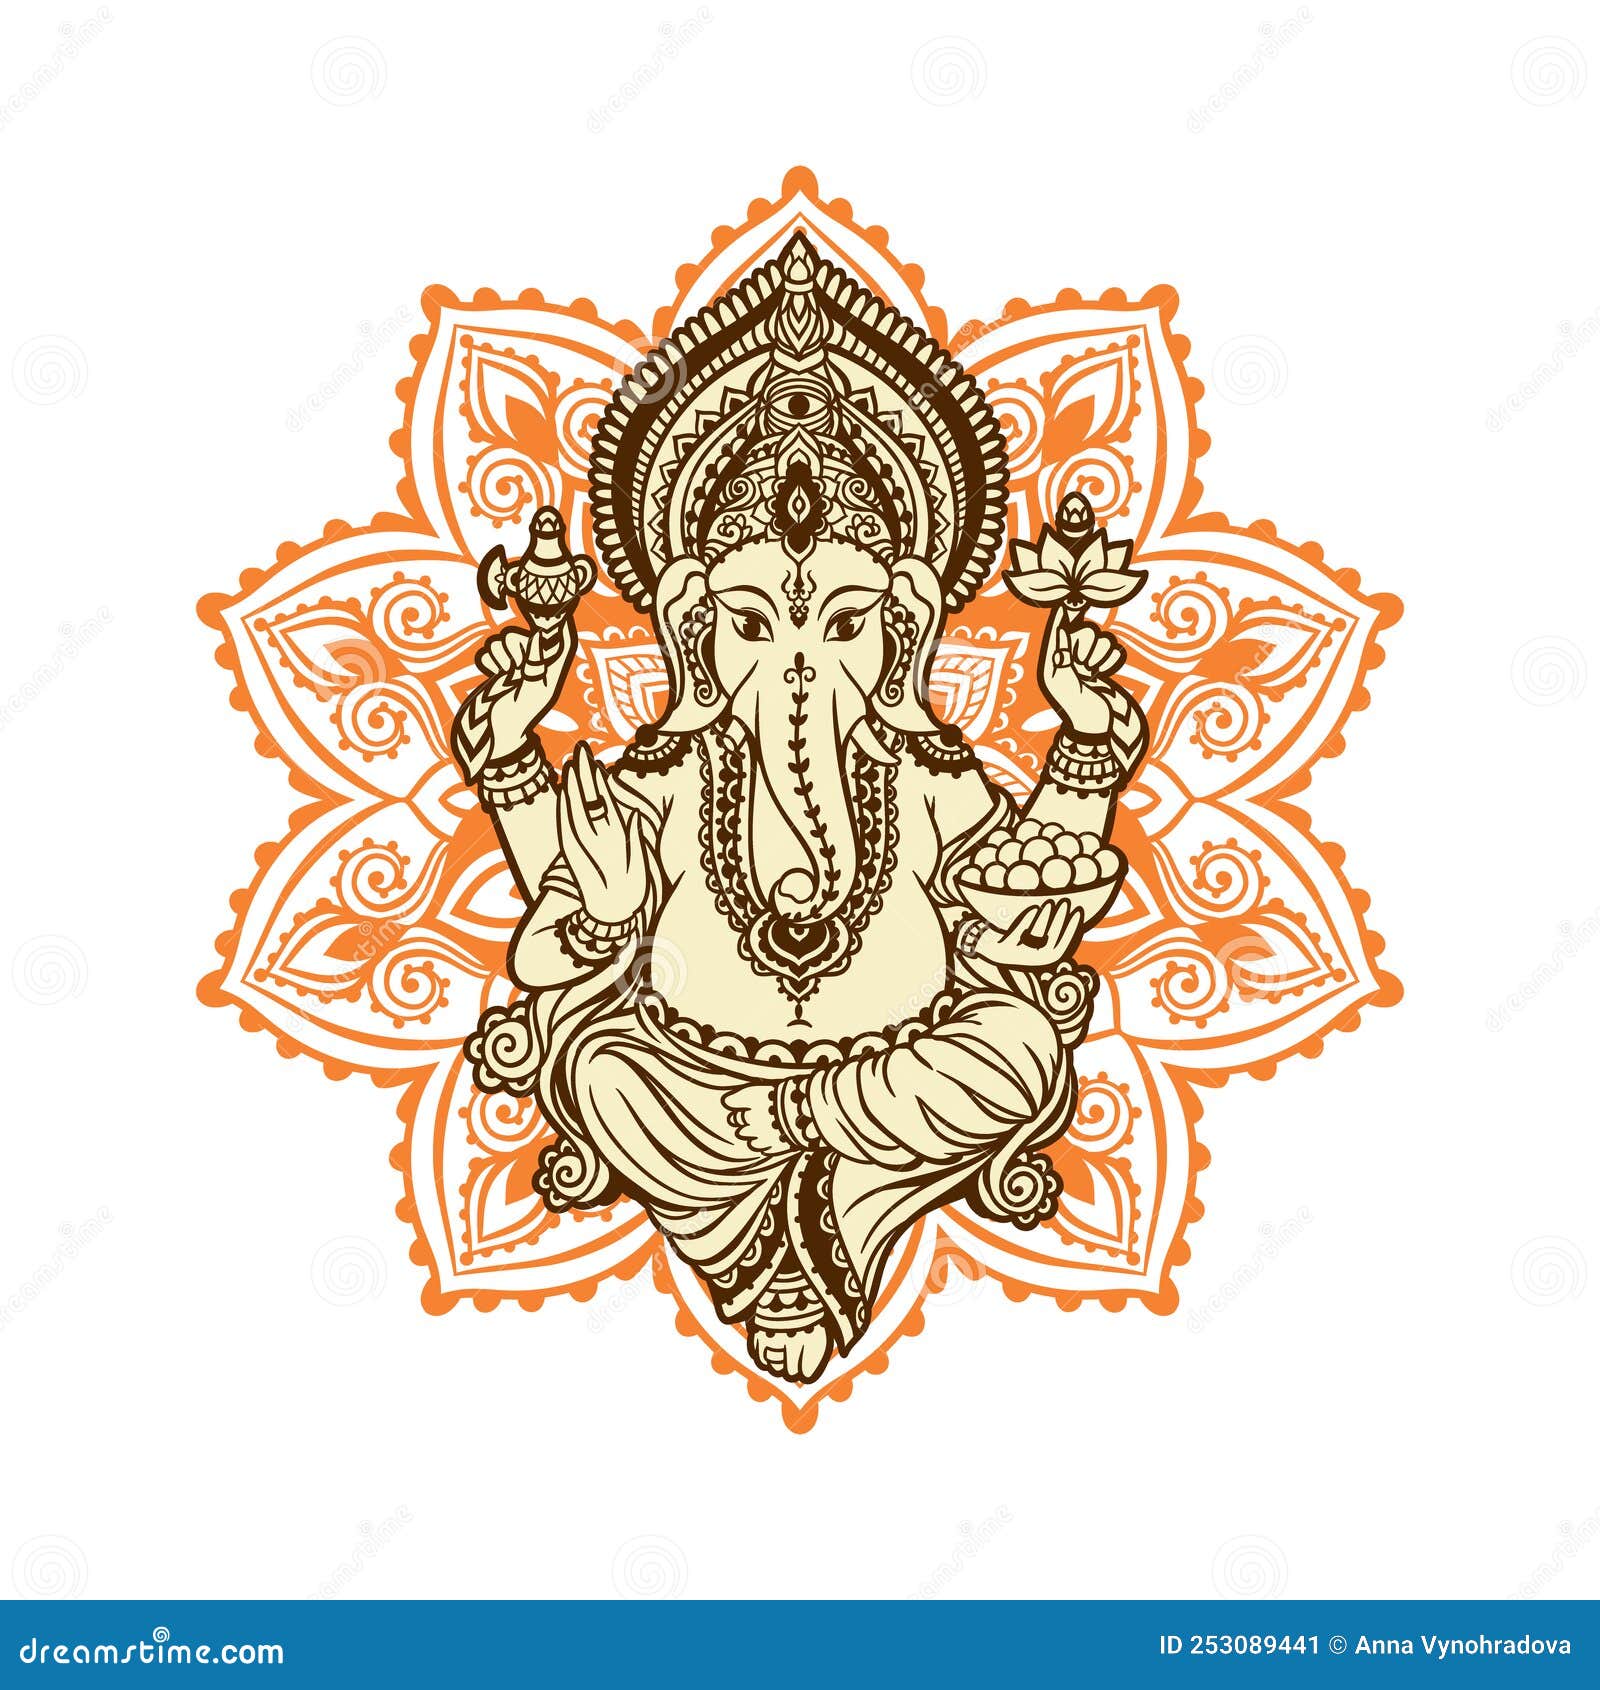 Lord Ganesh Image. God With Elephant Head. Vector Illustration ...